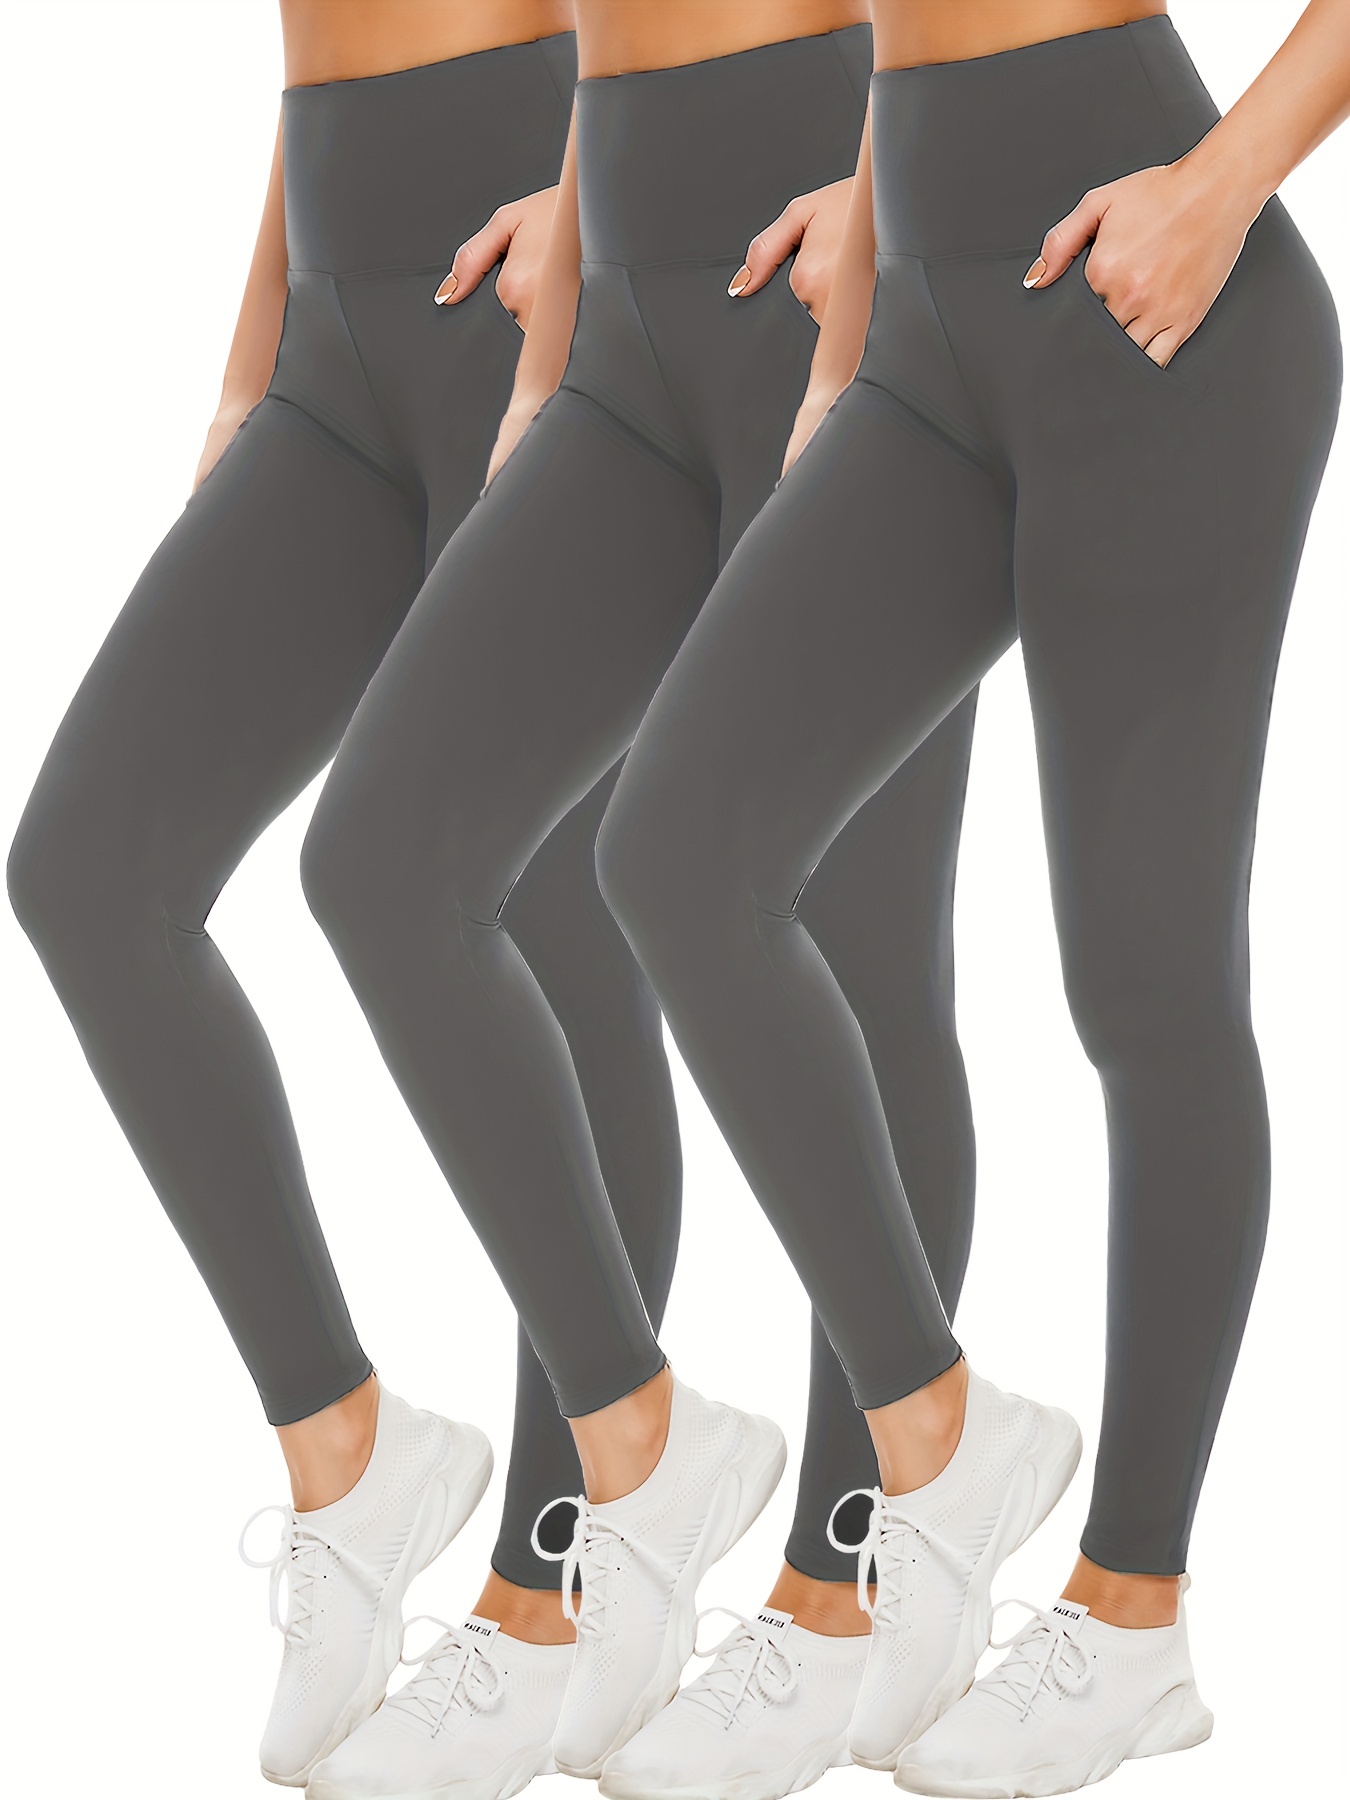 Aoliks Women Shorts High Waisted Pockets Leggings Black-Grey